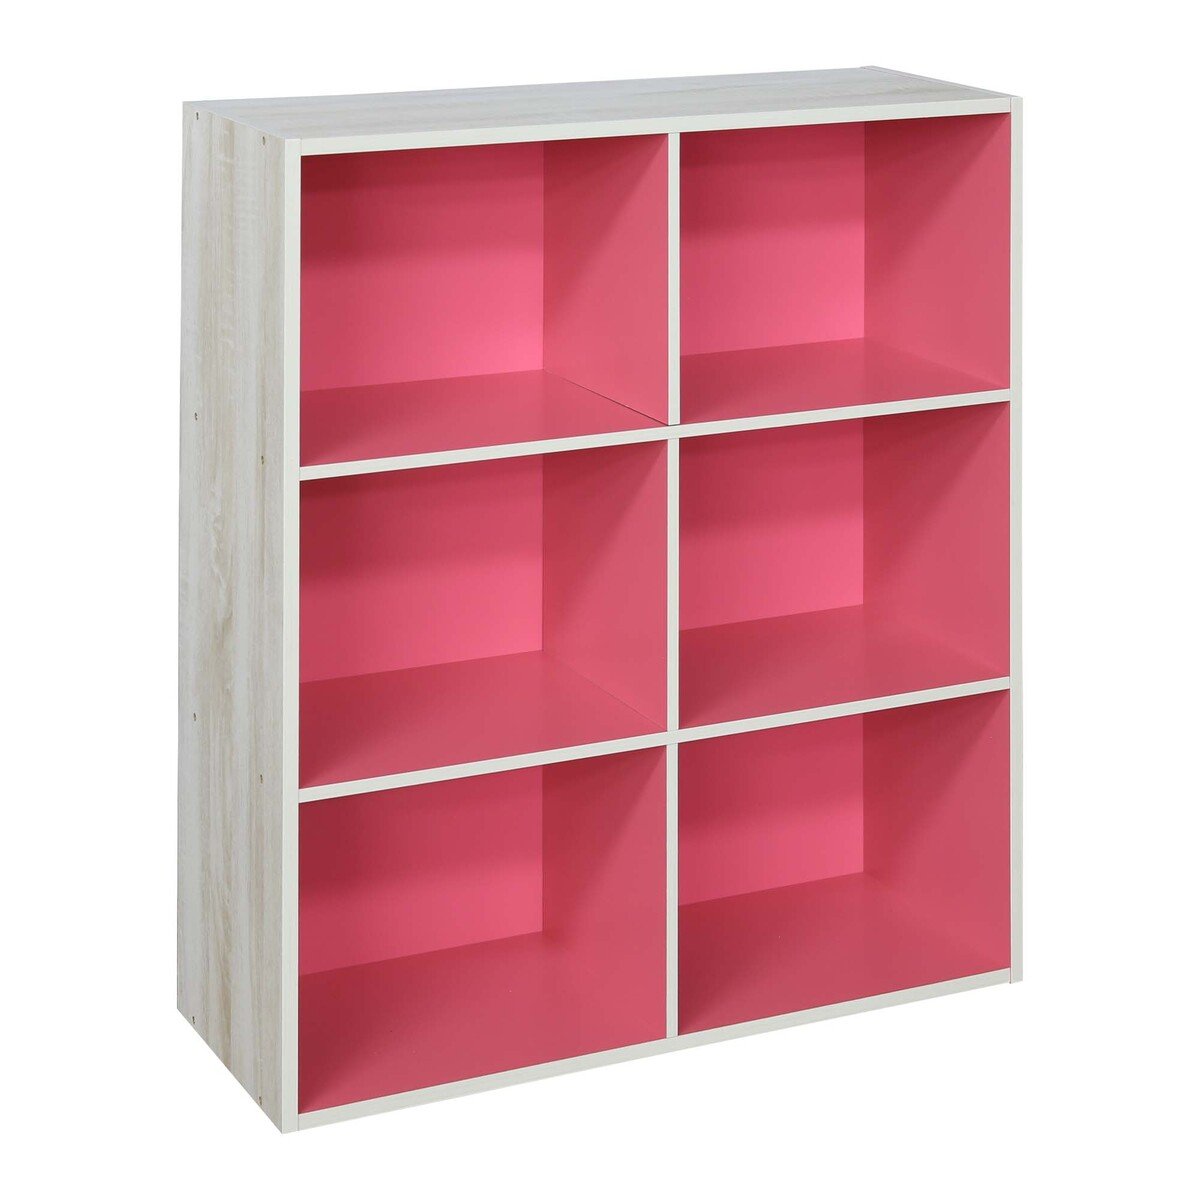 Maple Leaf Book Shelf Storage Organizer 6 Layer Pink